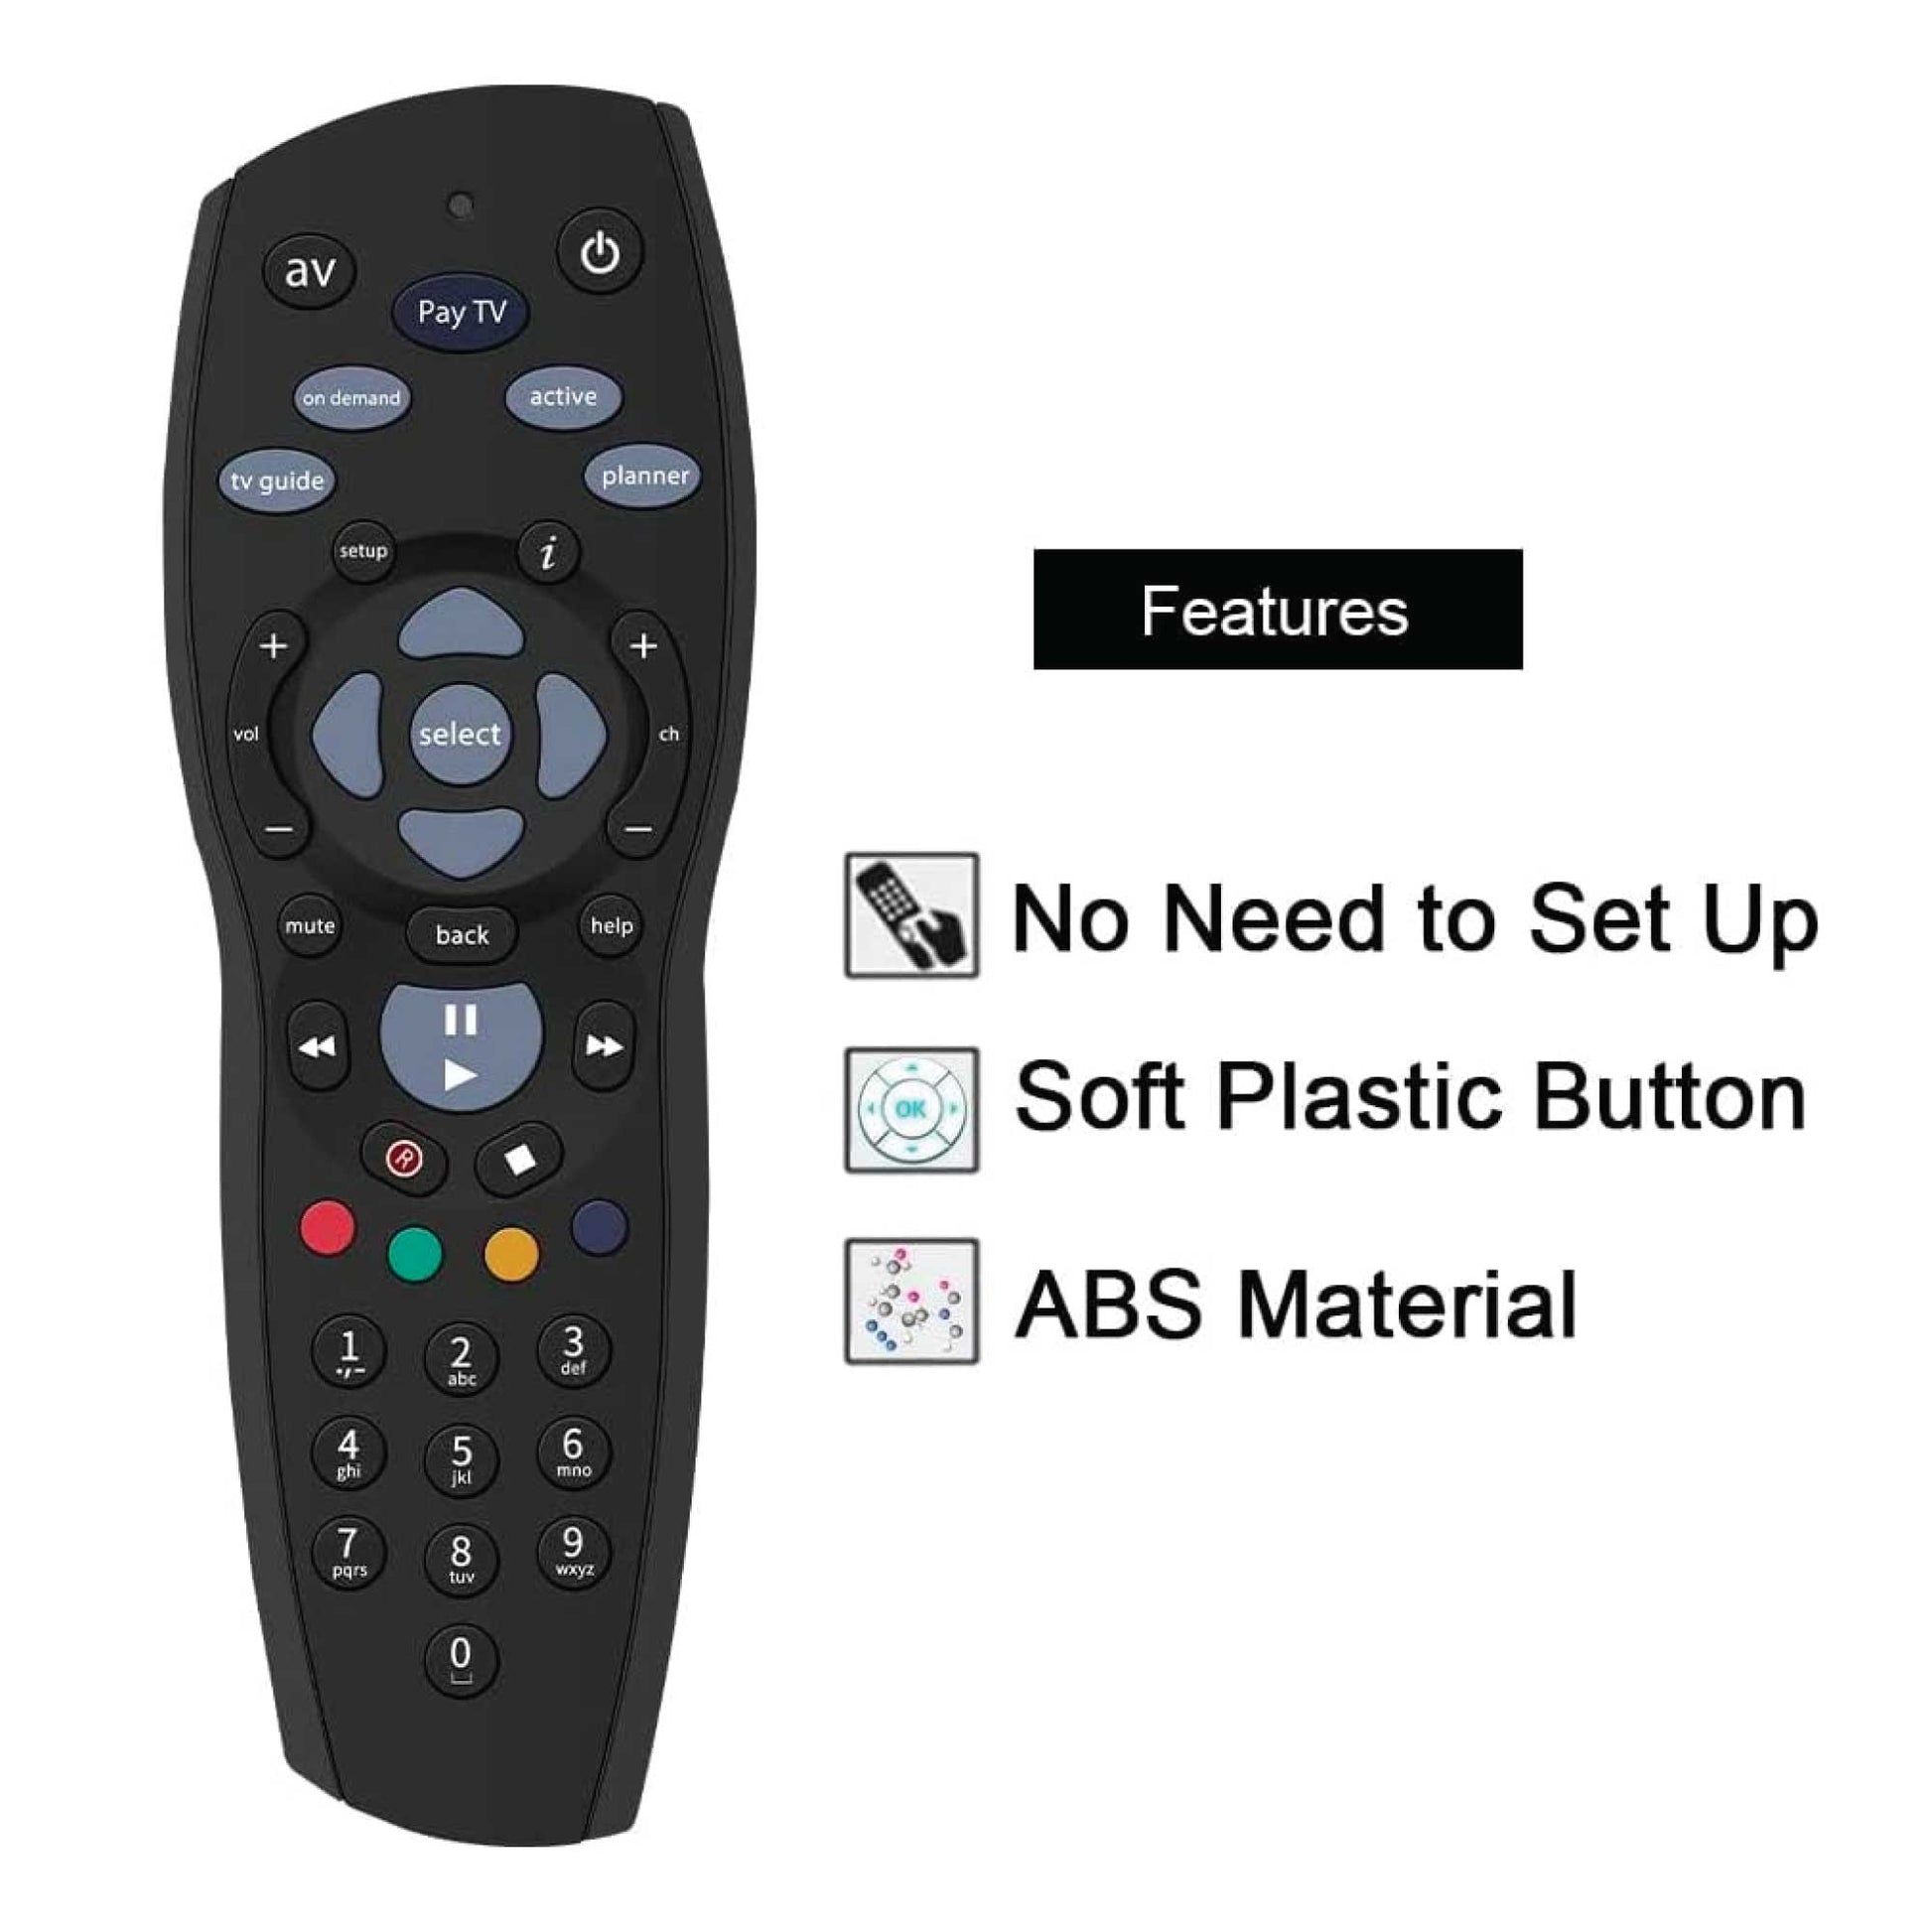 4x PayTV Remote Control Compatible with Foxtel MYSTAR SKY NEW ZEALAND - Black